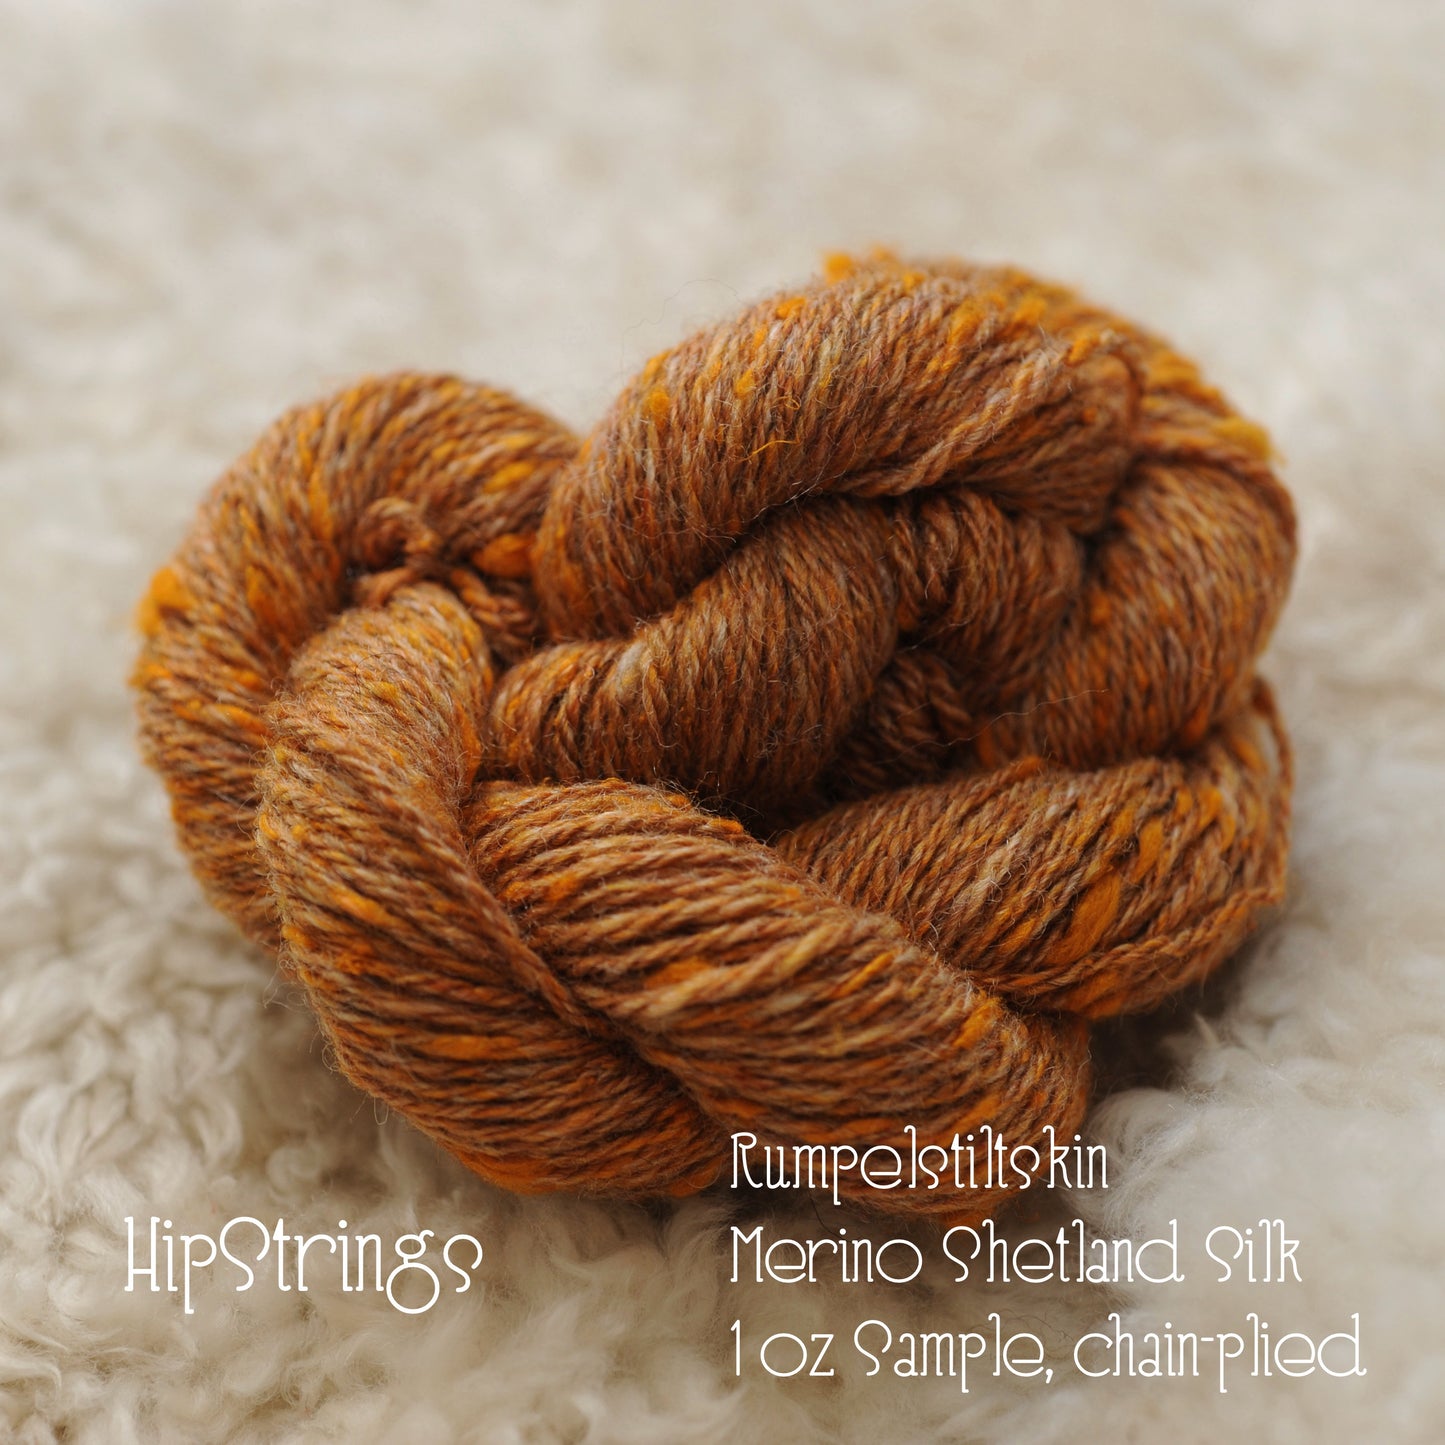 Rumpelstiltskin Merino Shetland Silk Signature Blend Combed Top - 4 oz